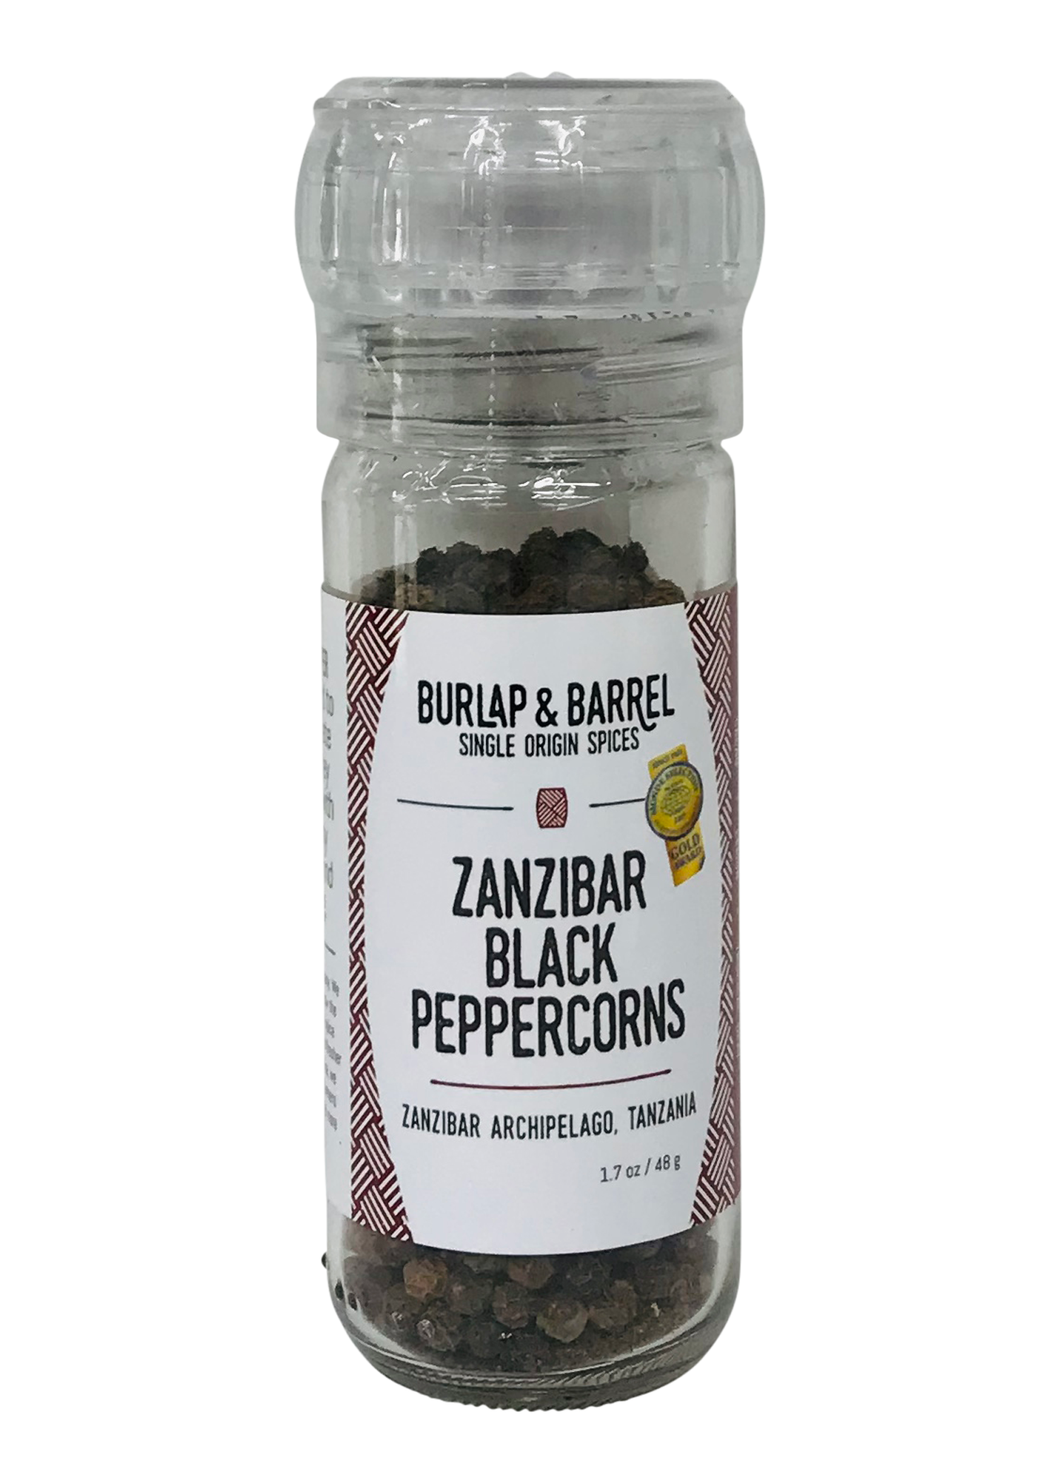 Zanzibar Peppercorns